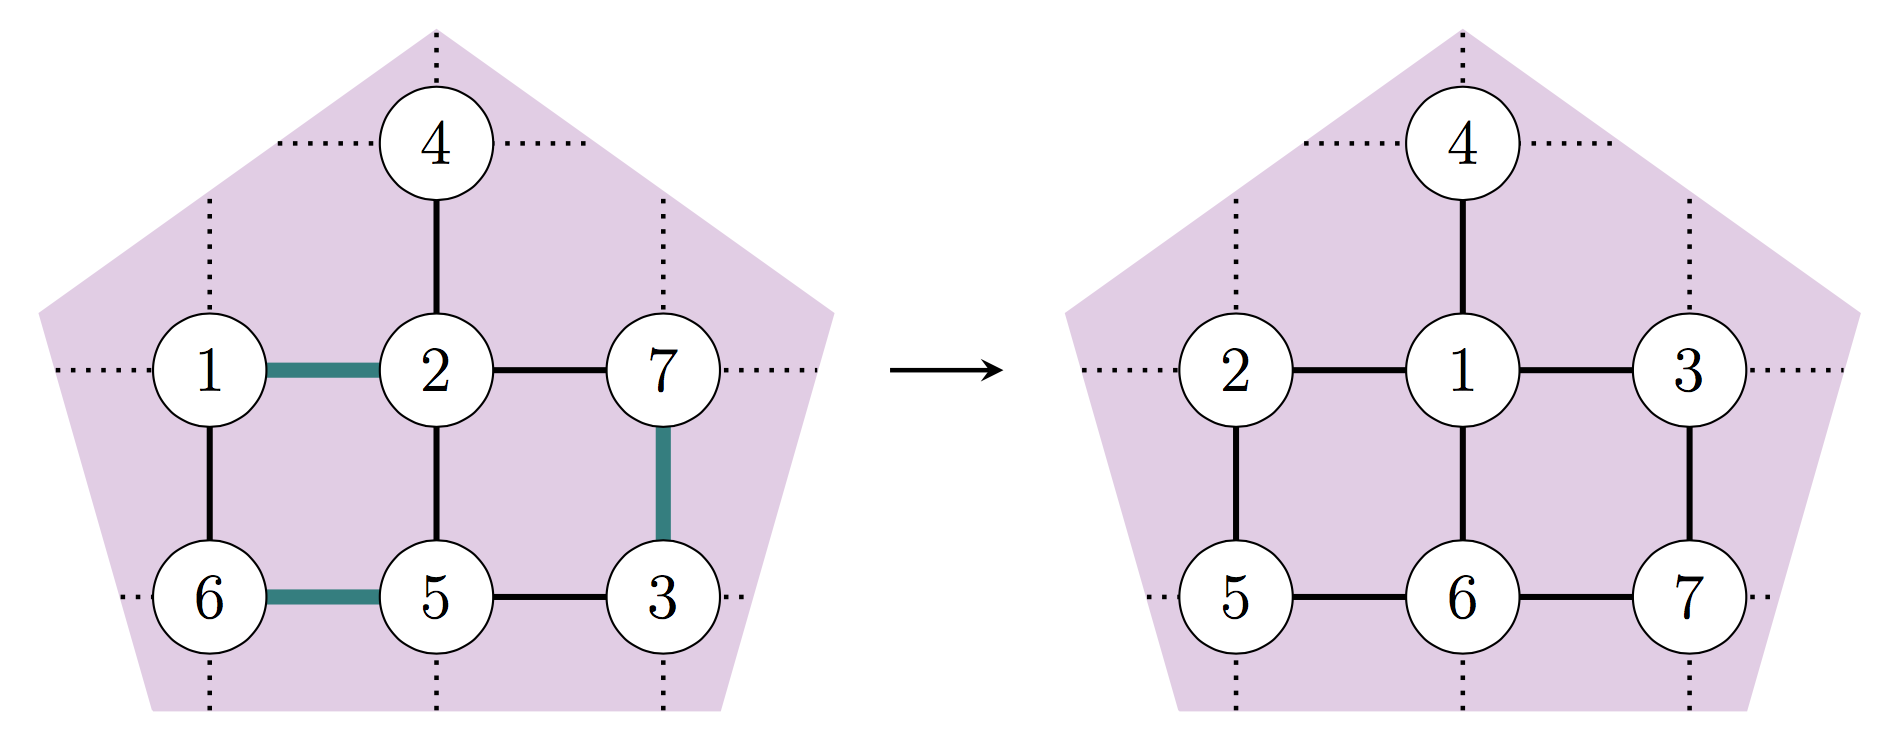 vertex label configurations on a graph inside a pentagonal region